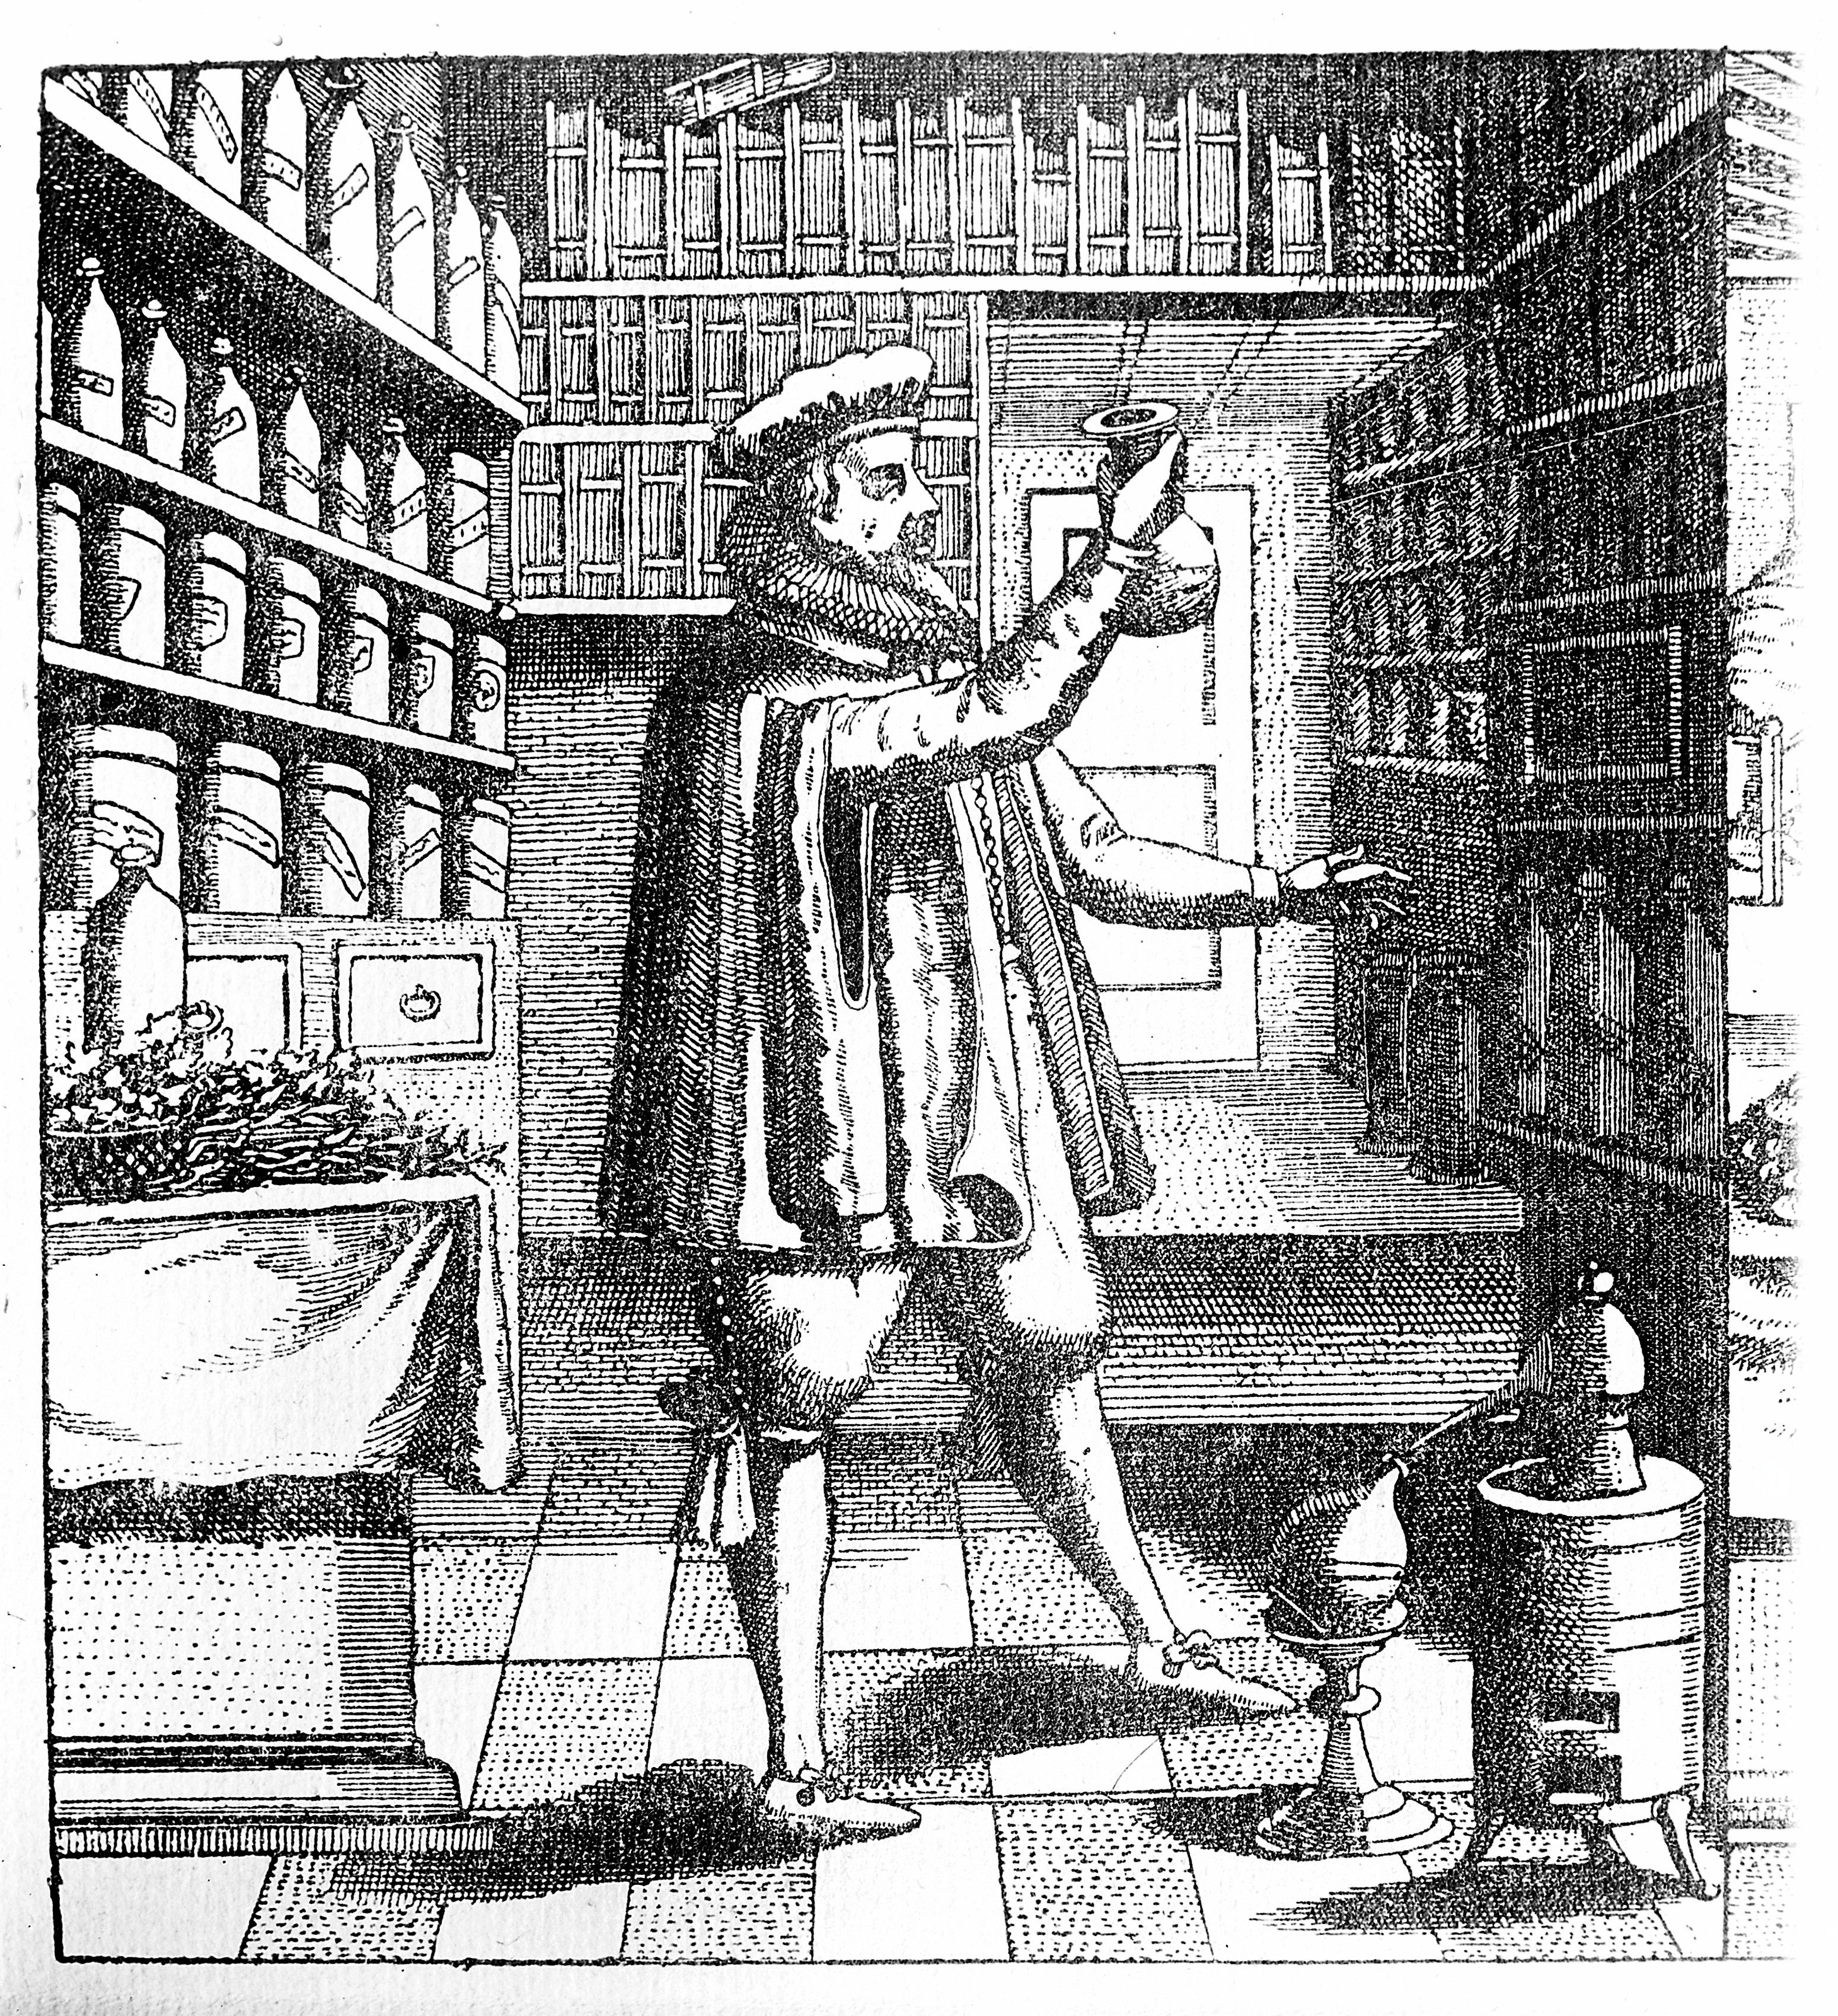 Woodcut print of an apothocary in Renaissance garb examining a vial